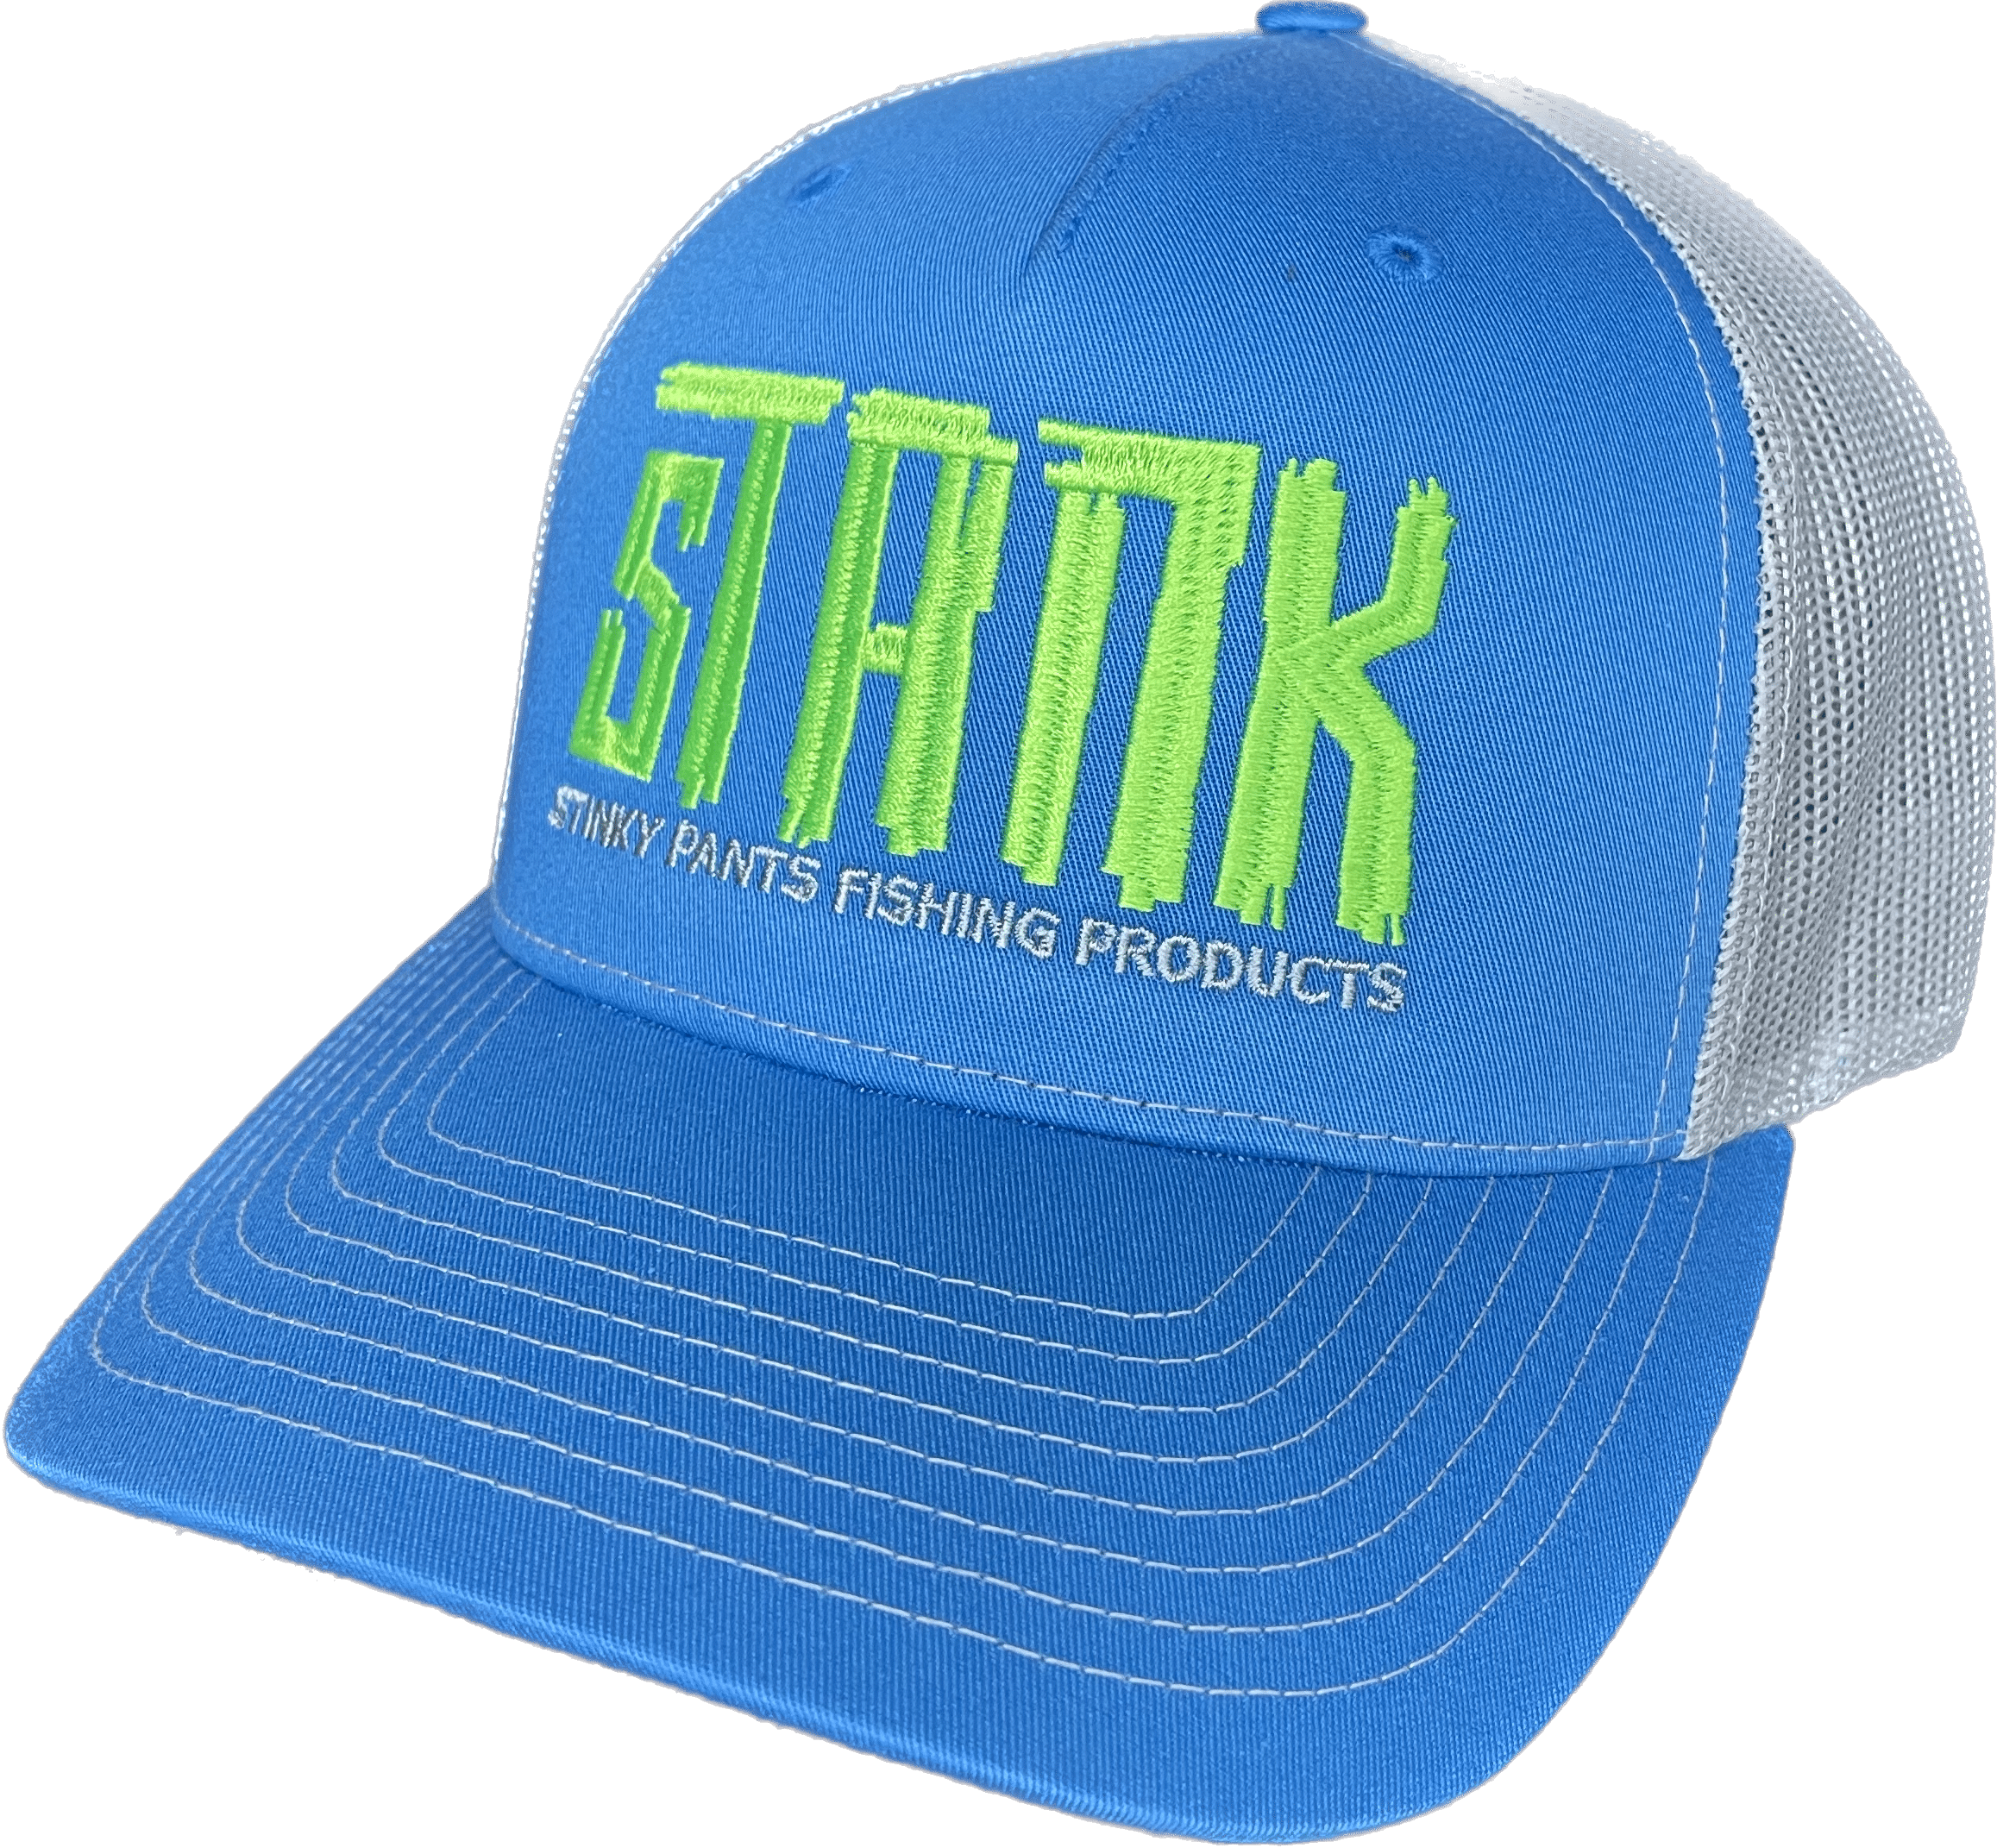 Lt Blue Hulk Stank - Stinky Pants Fishing